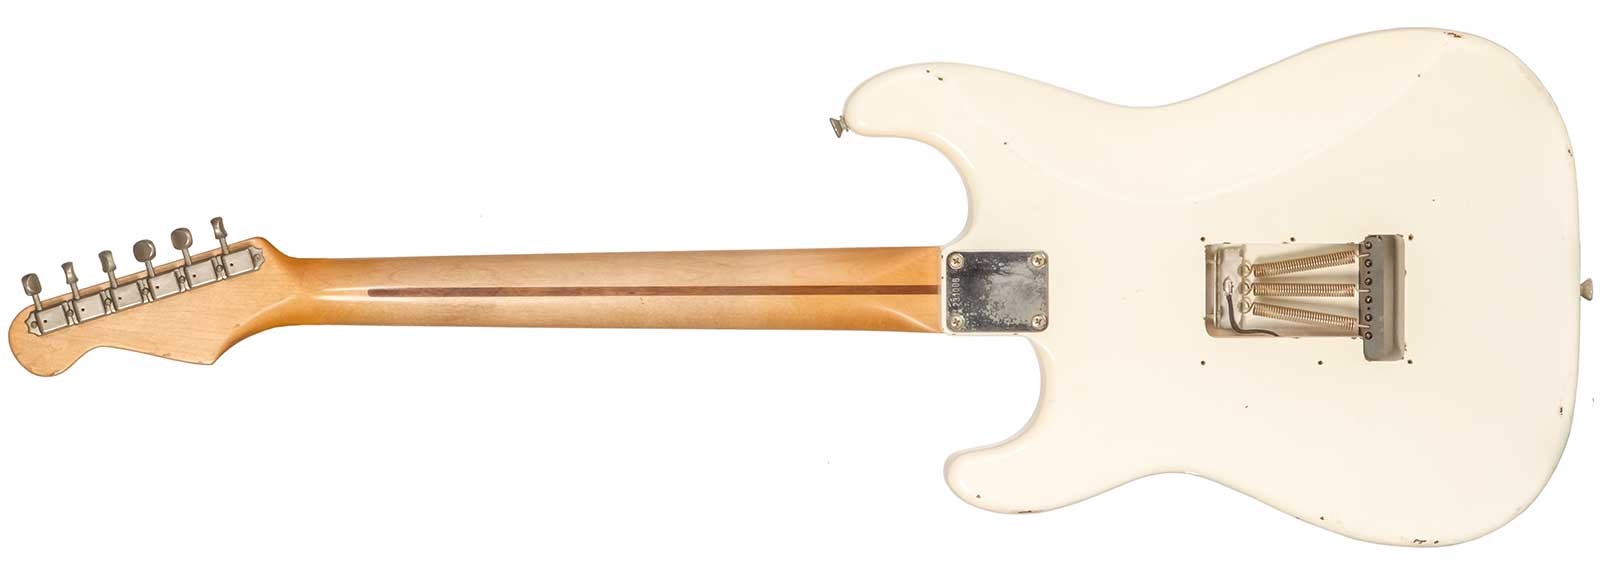 Rebelrelic S-series 1955 3s Trem Mn #231006 - Olympic White - E-Gitarre in Str-Form - Variation 1